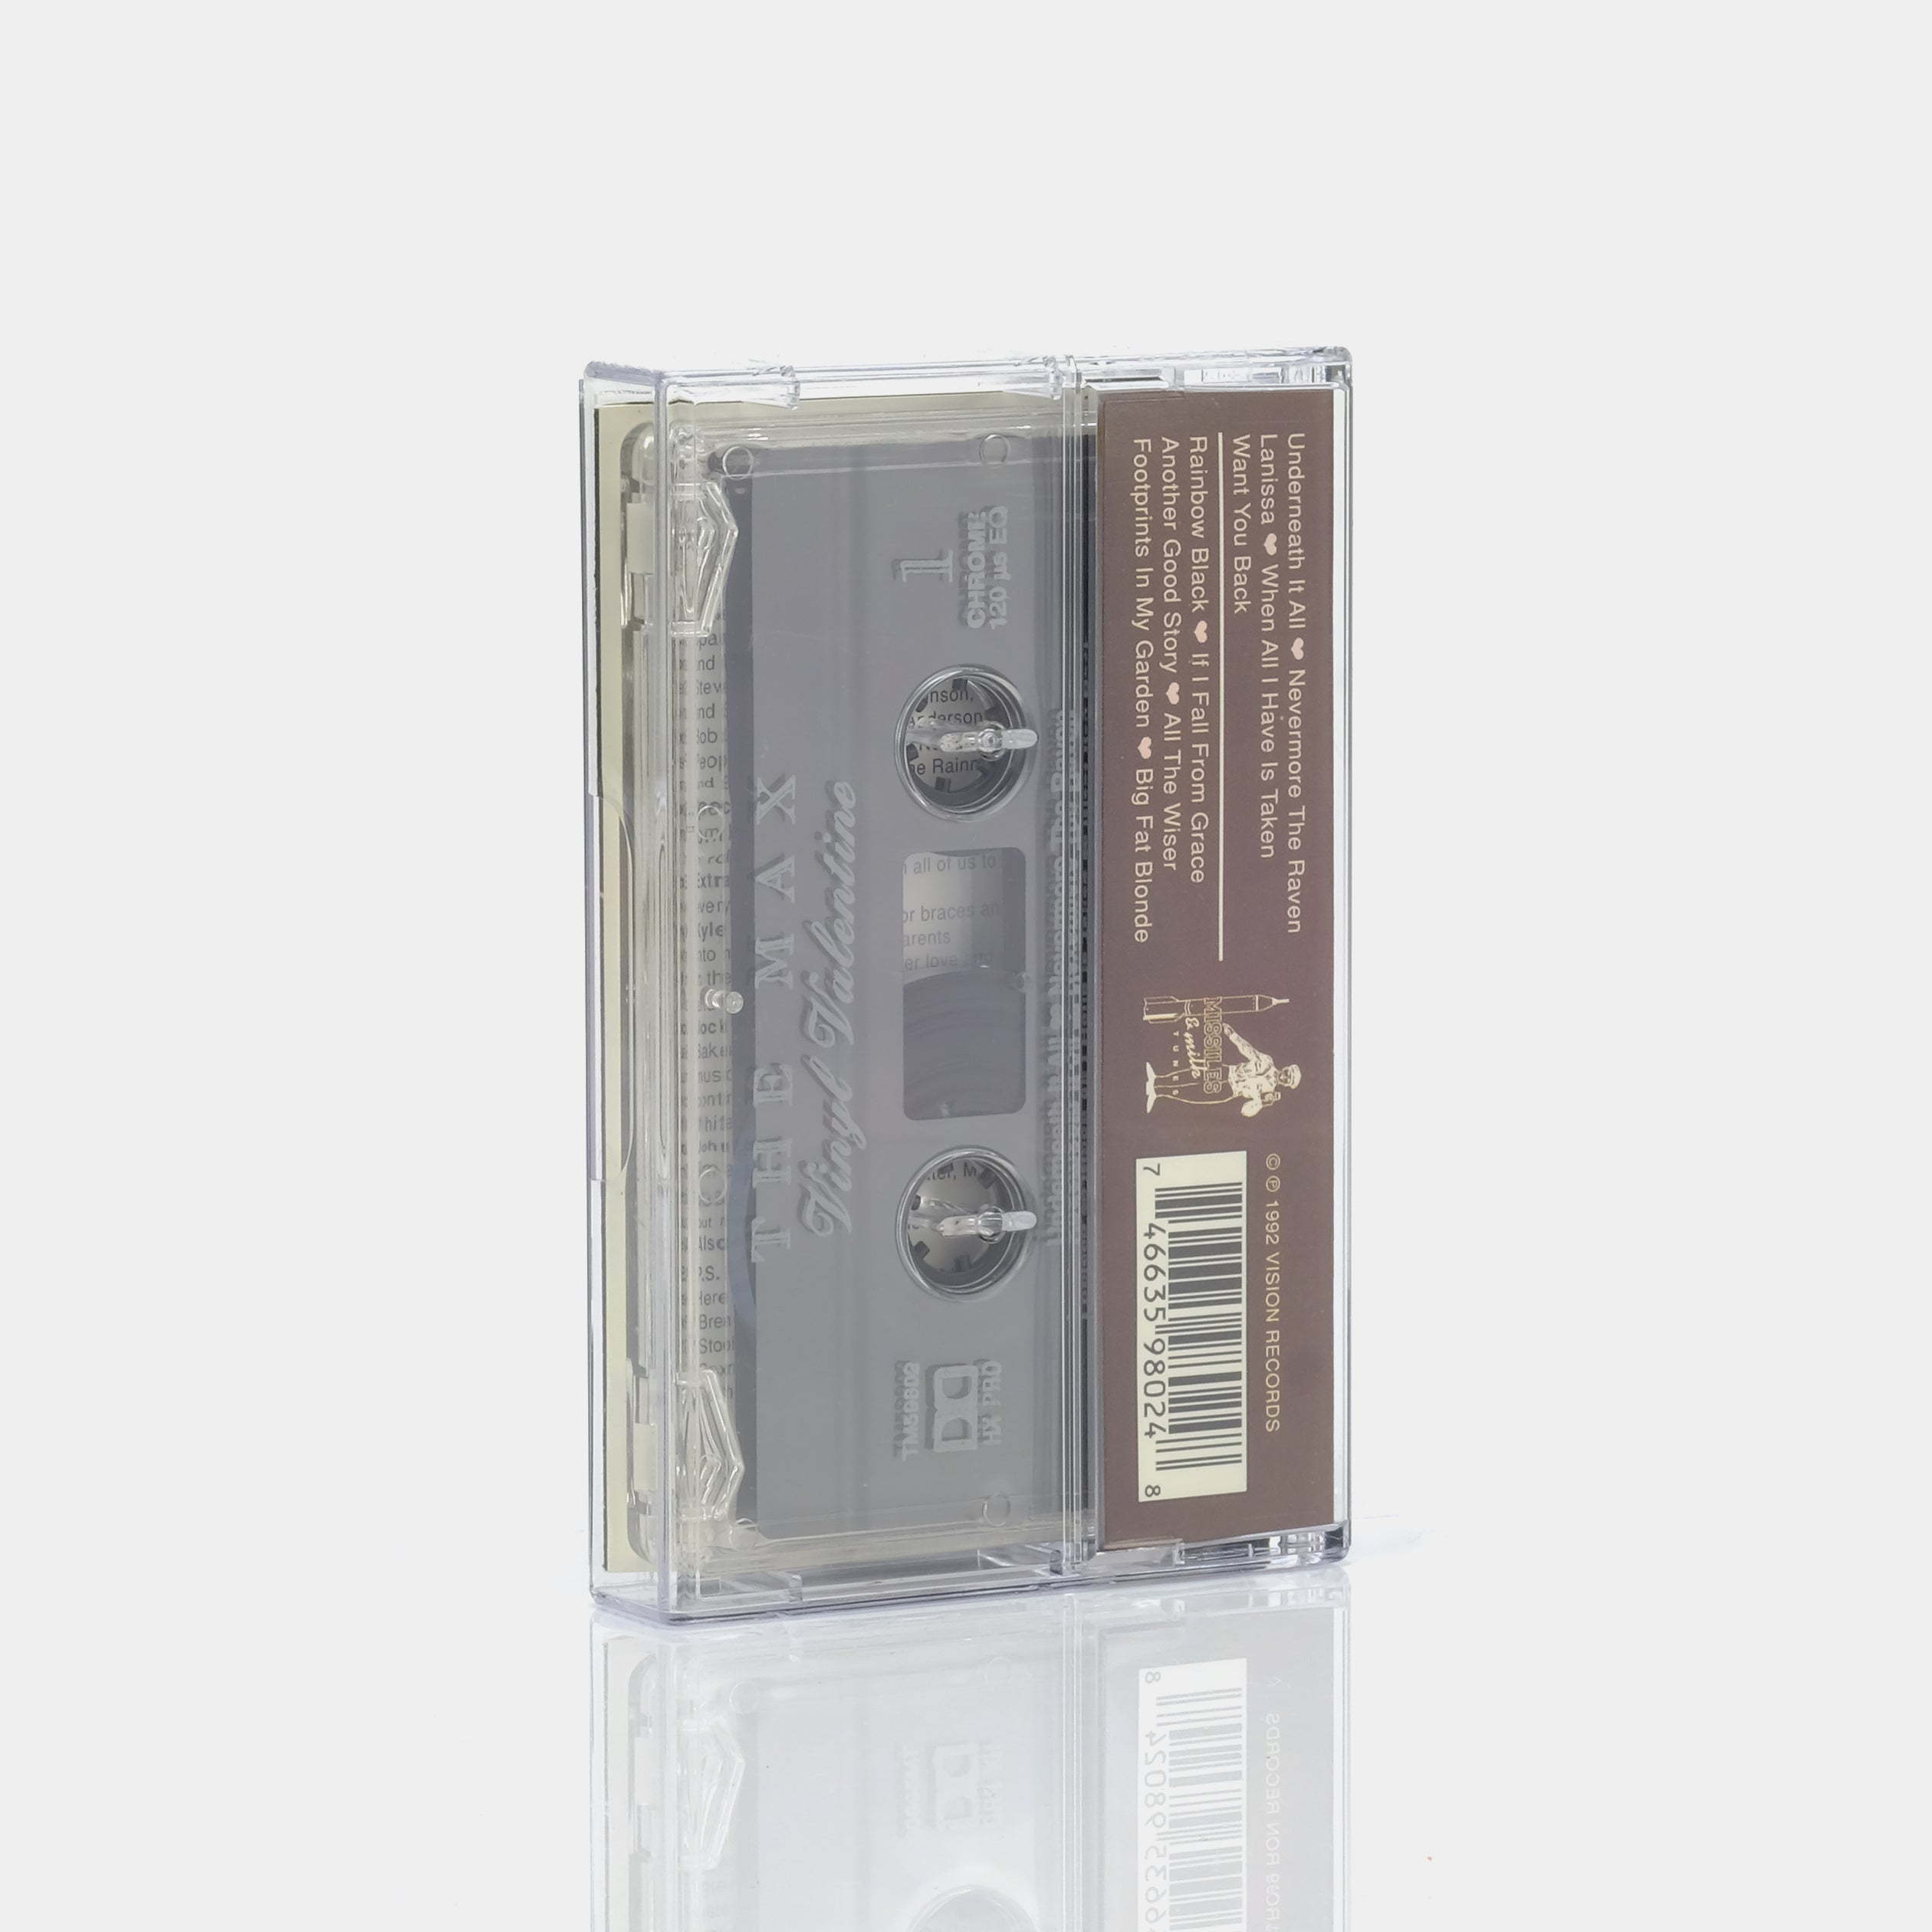 The Max - Vinyl Valentine Cassette Tape